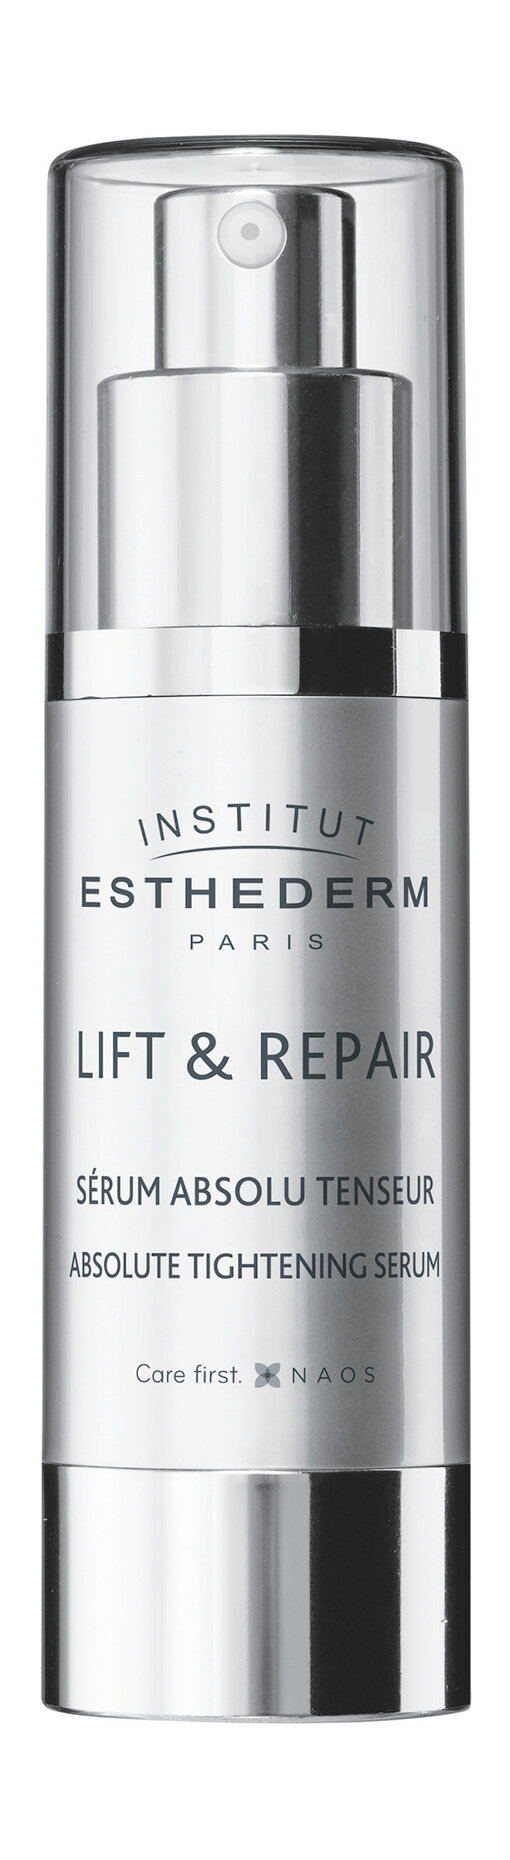 Омолаживающая сыворотка для упругости кожи лица Institut Esthederm Lift Repair Absolute Tightening Serum /30 мл/гр.